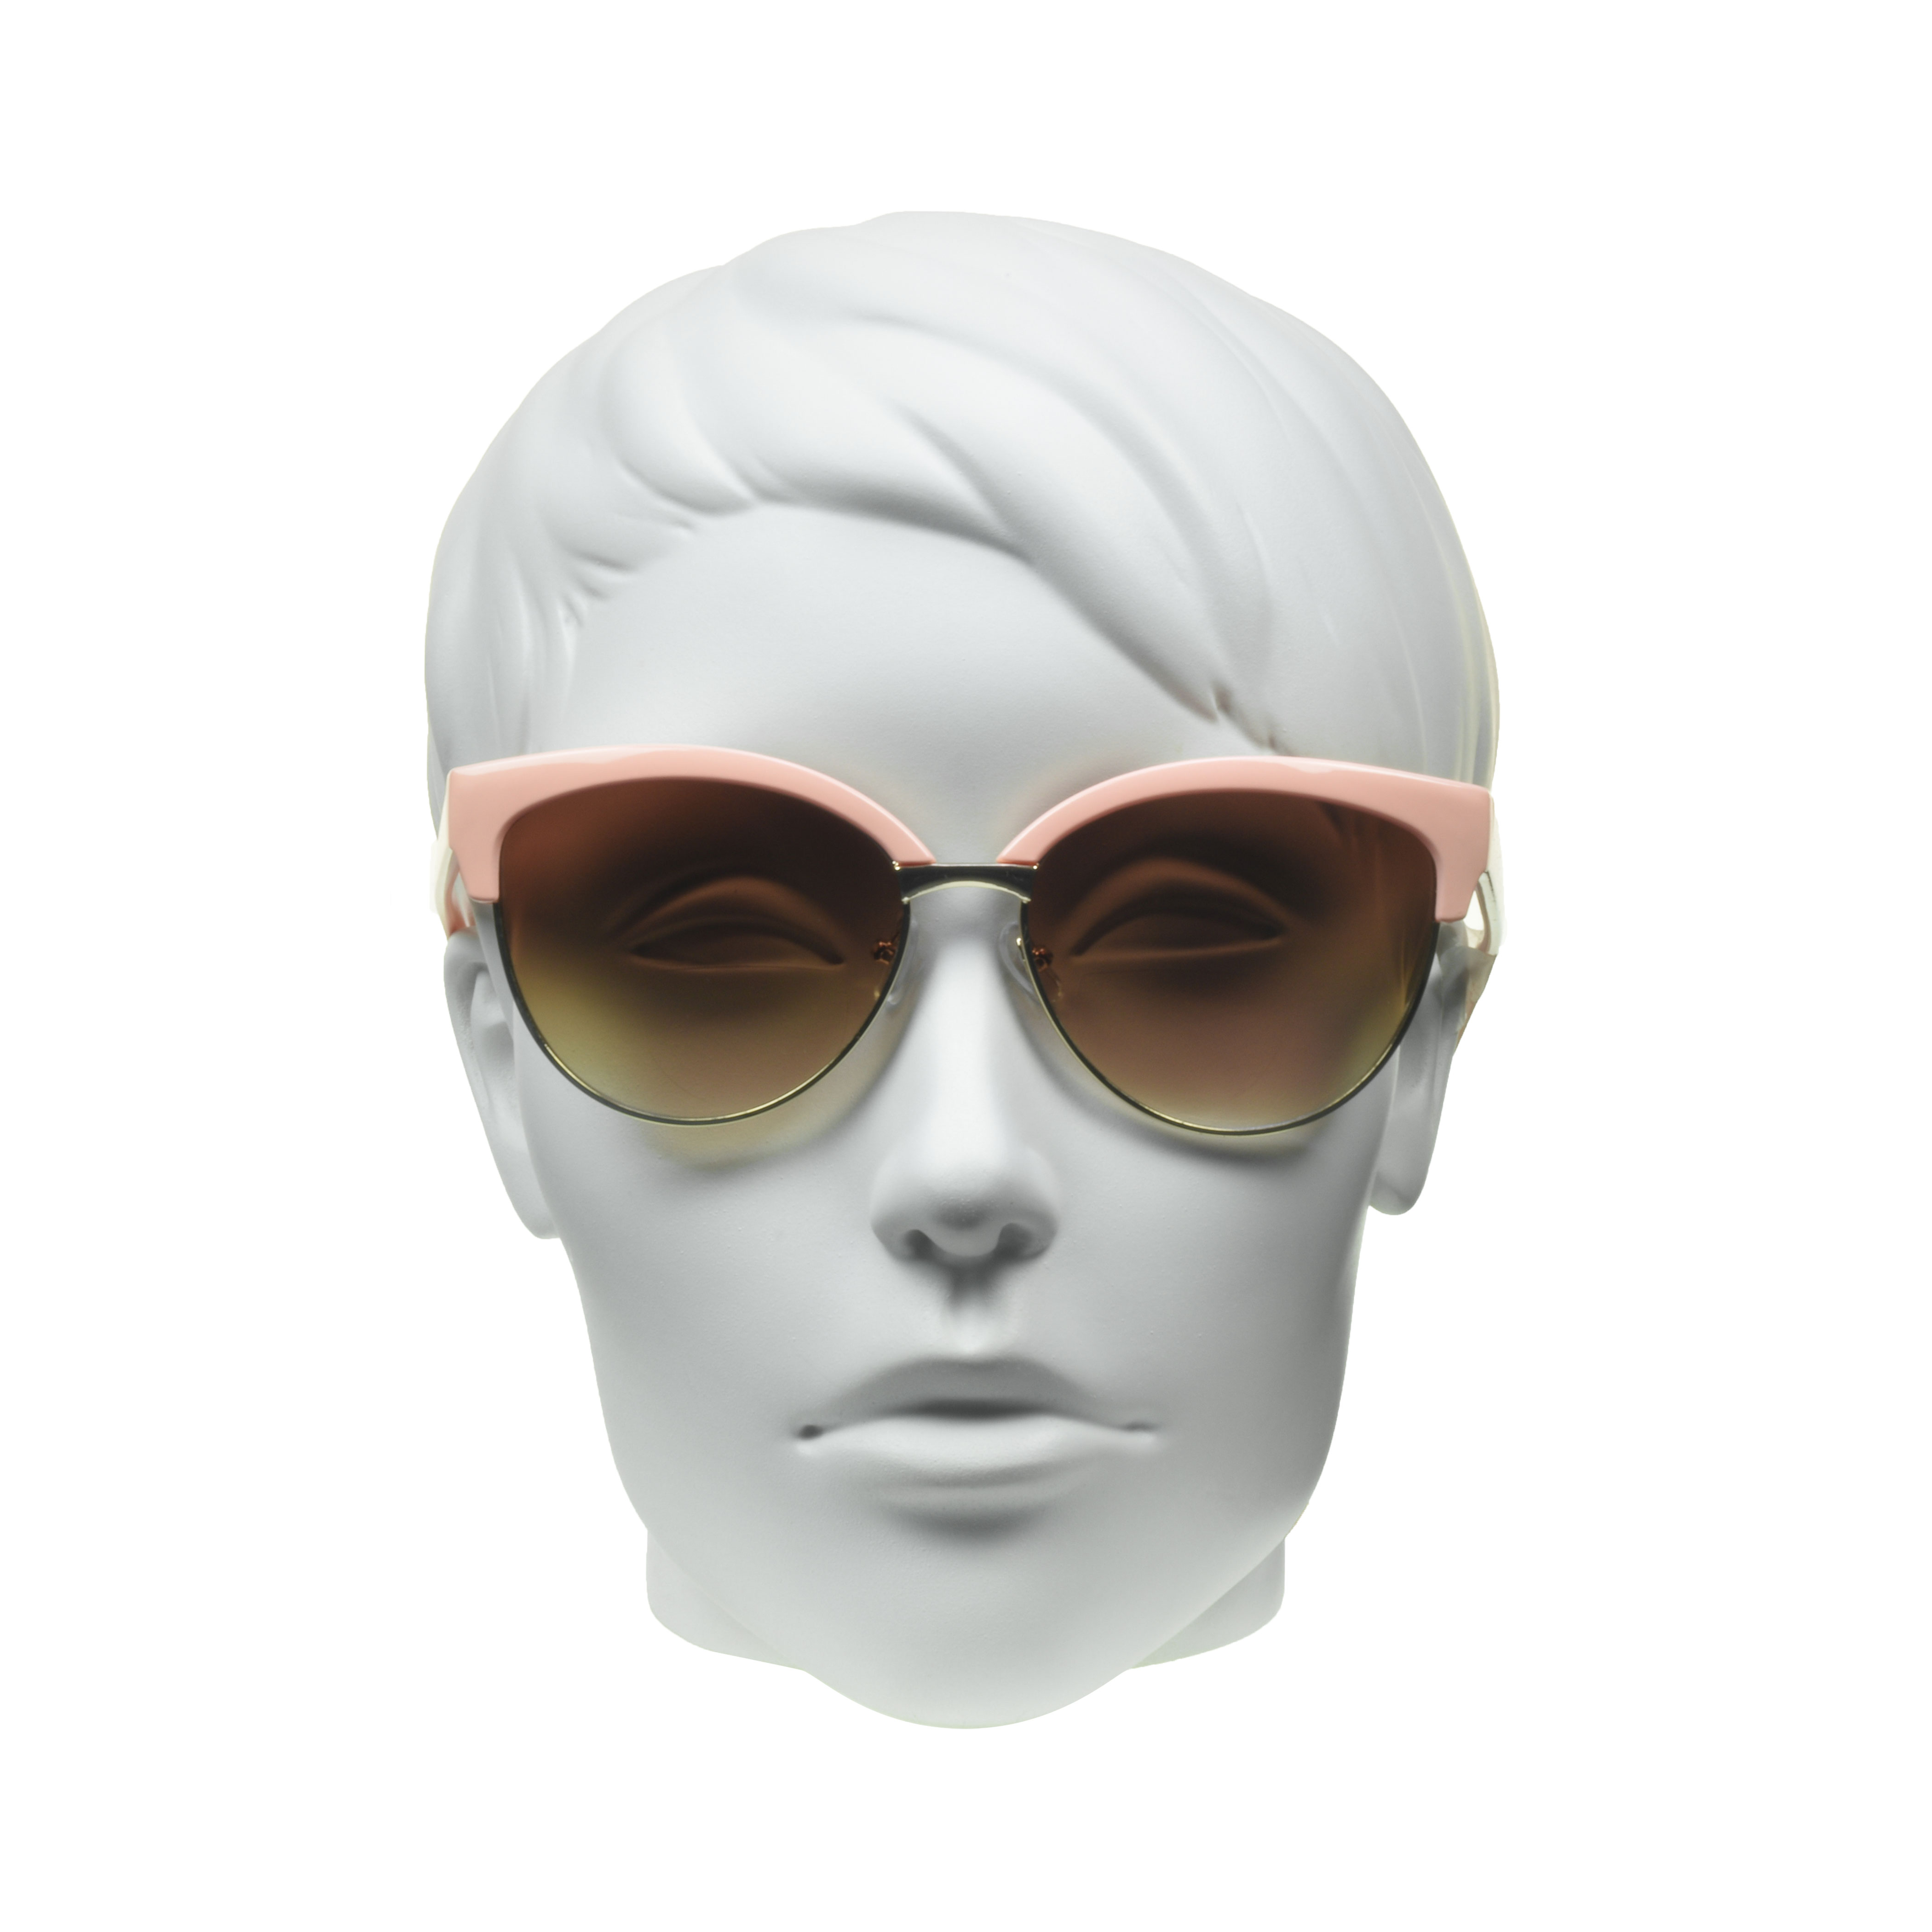 proSPORT Women Bifocal Reading Cateye Fashion Horn Rim Sunglasses Pink Gold Frame Brown Lens +1.50 - image 3 of 5